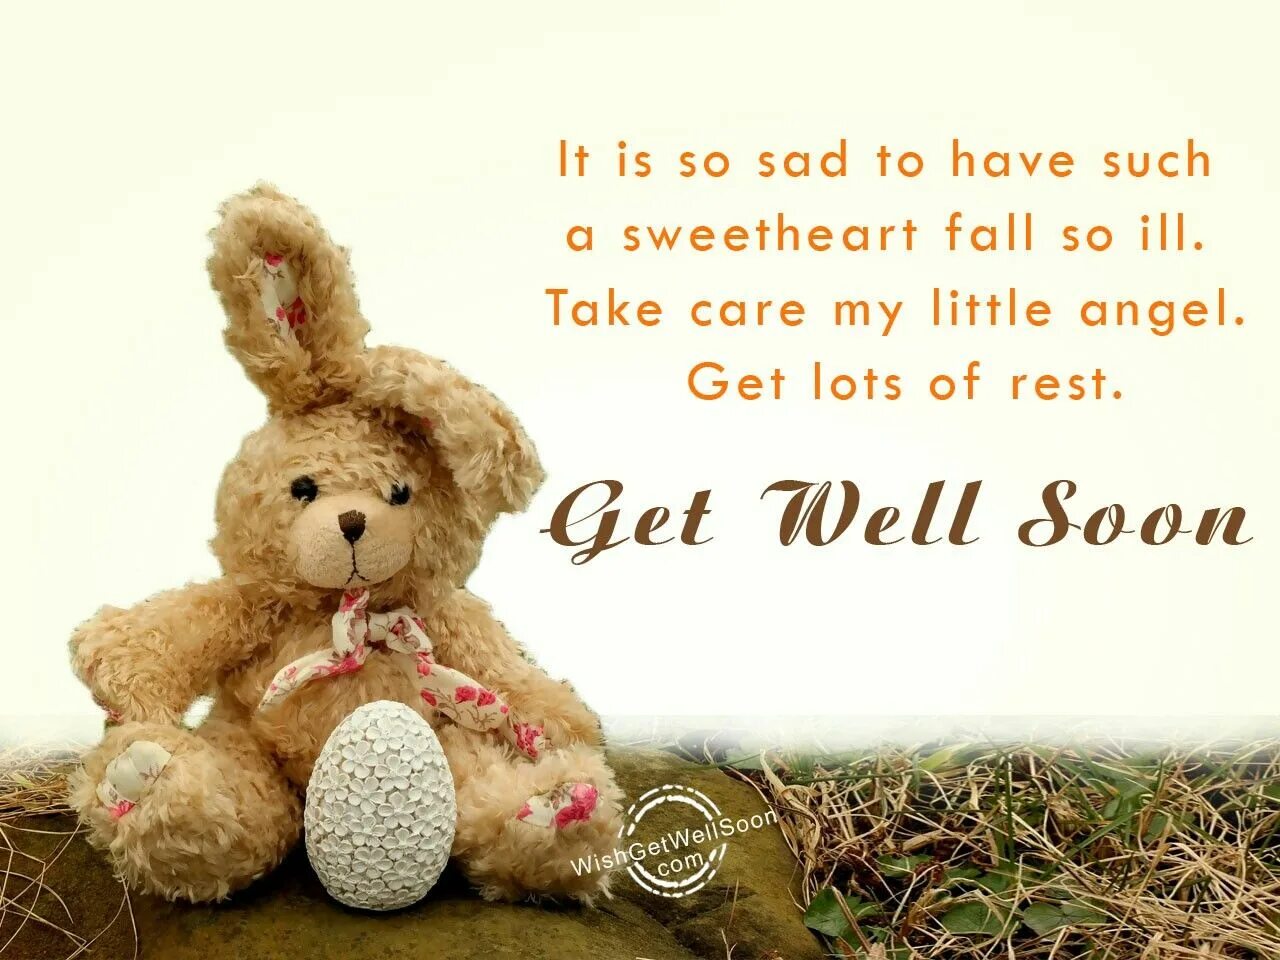 Get better на русском. Открытка get well soon. Get well soon открытка на английском. Get well soon перевод. Get well открытка.